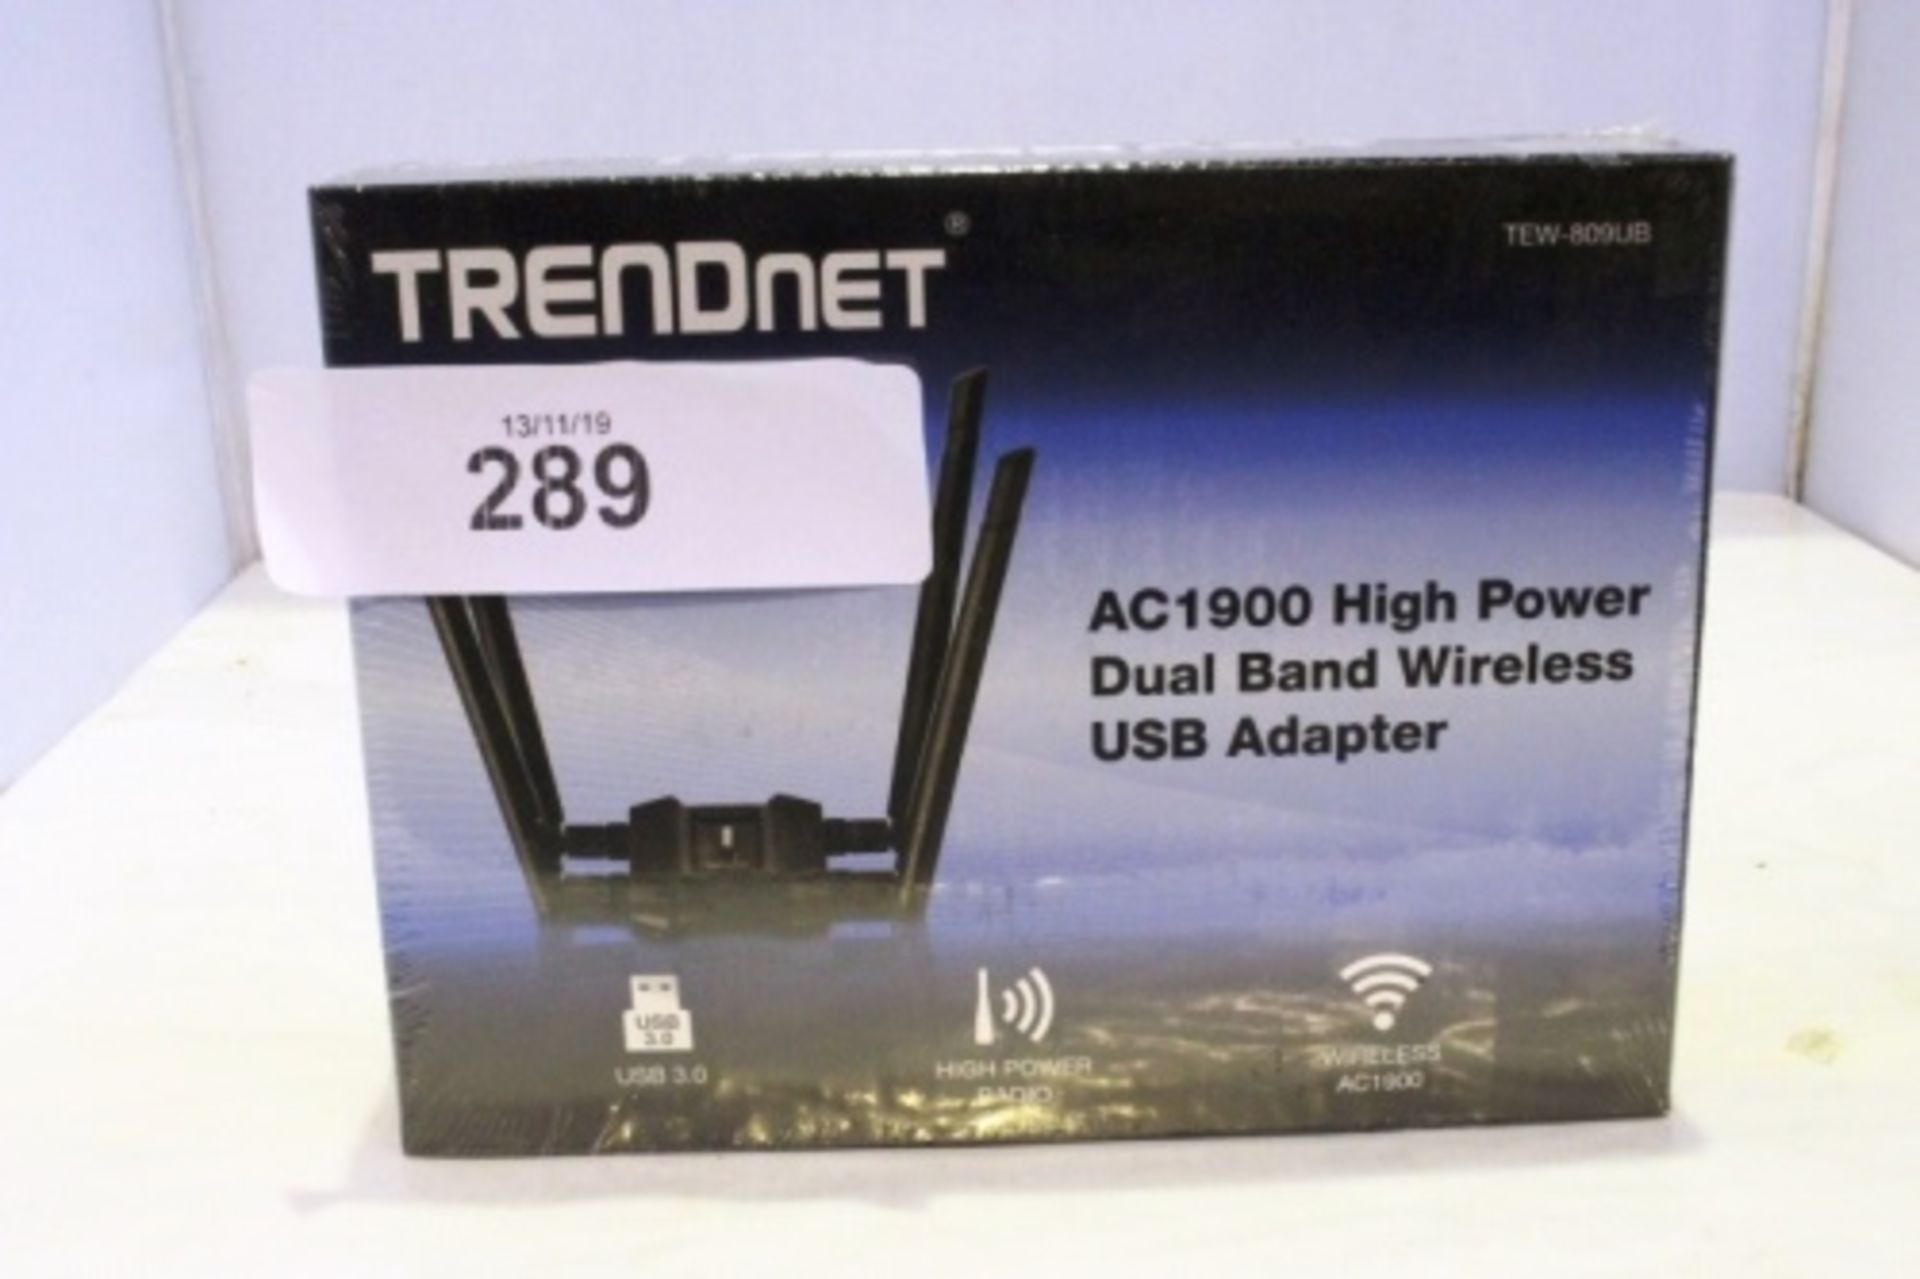 1 x TRENDnet AC1900 dual band wireless USB adapter, model TEW-809UB - Sealed new in box (C1)